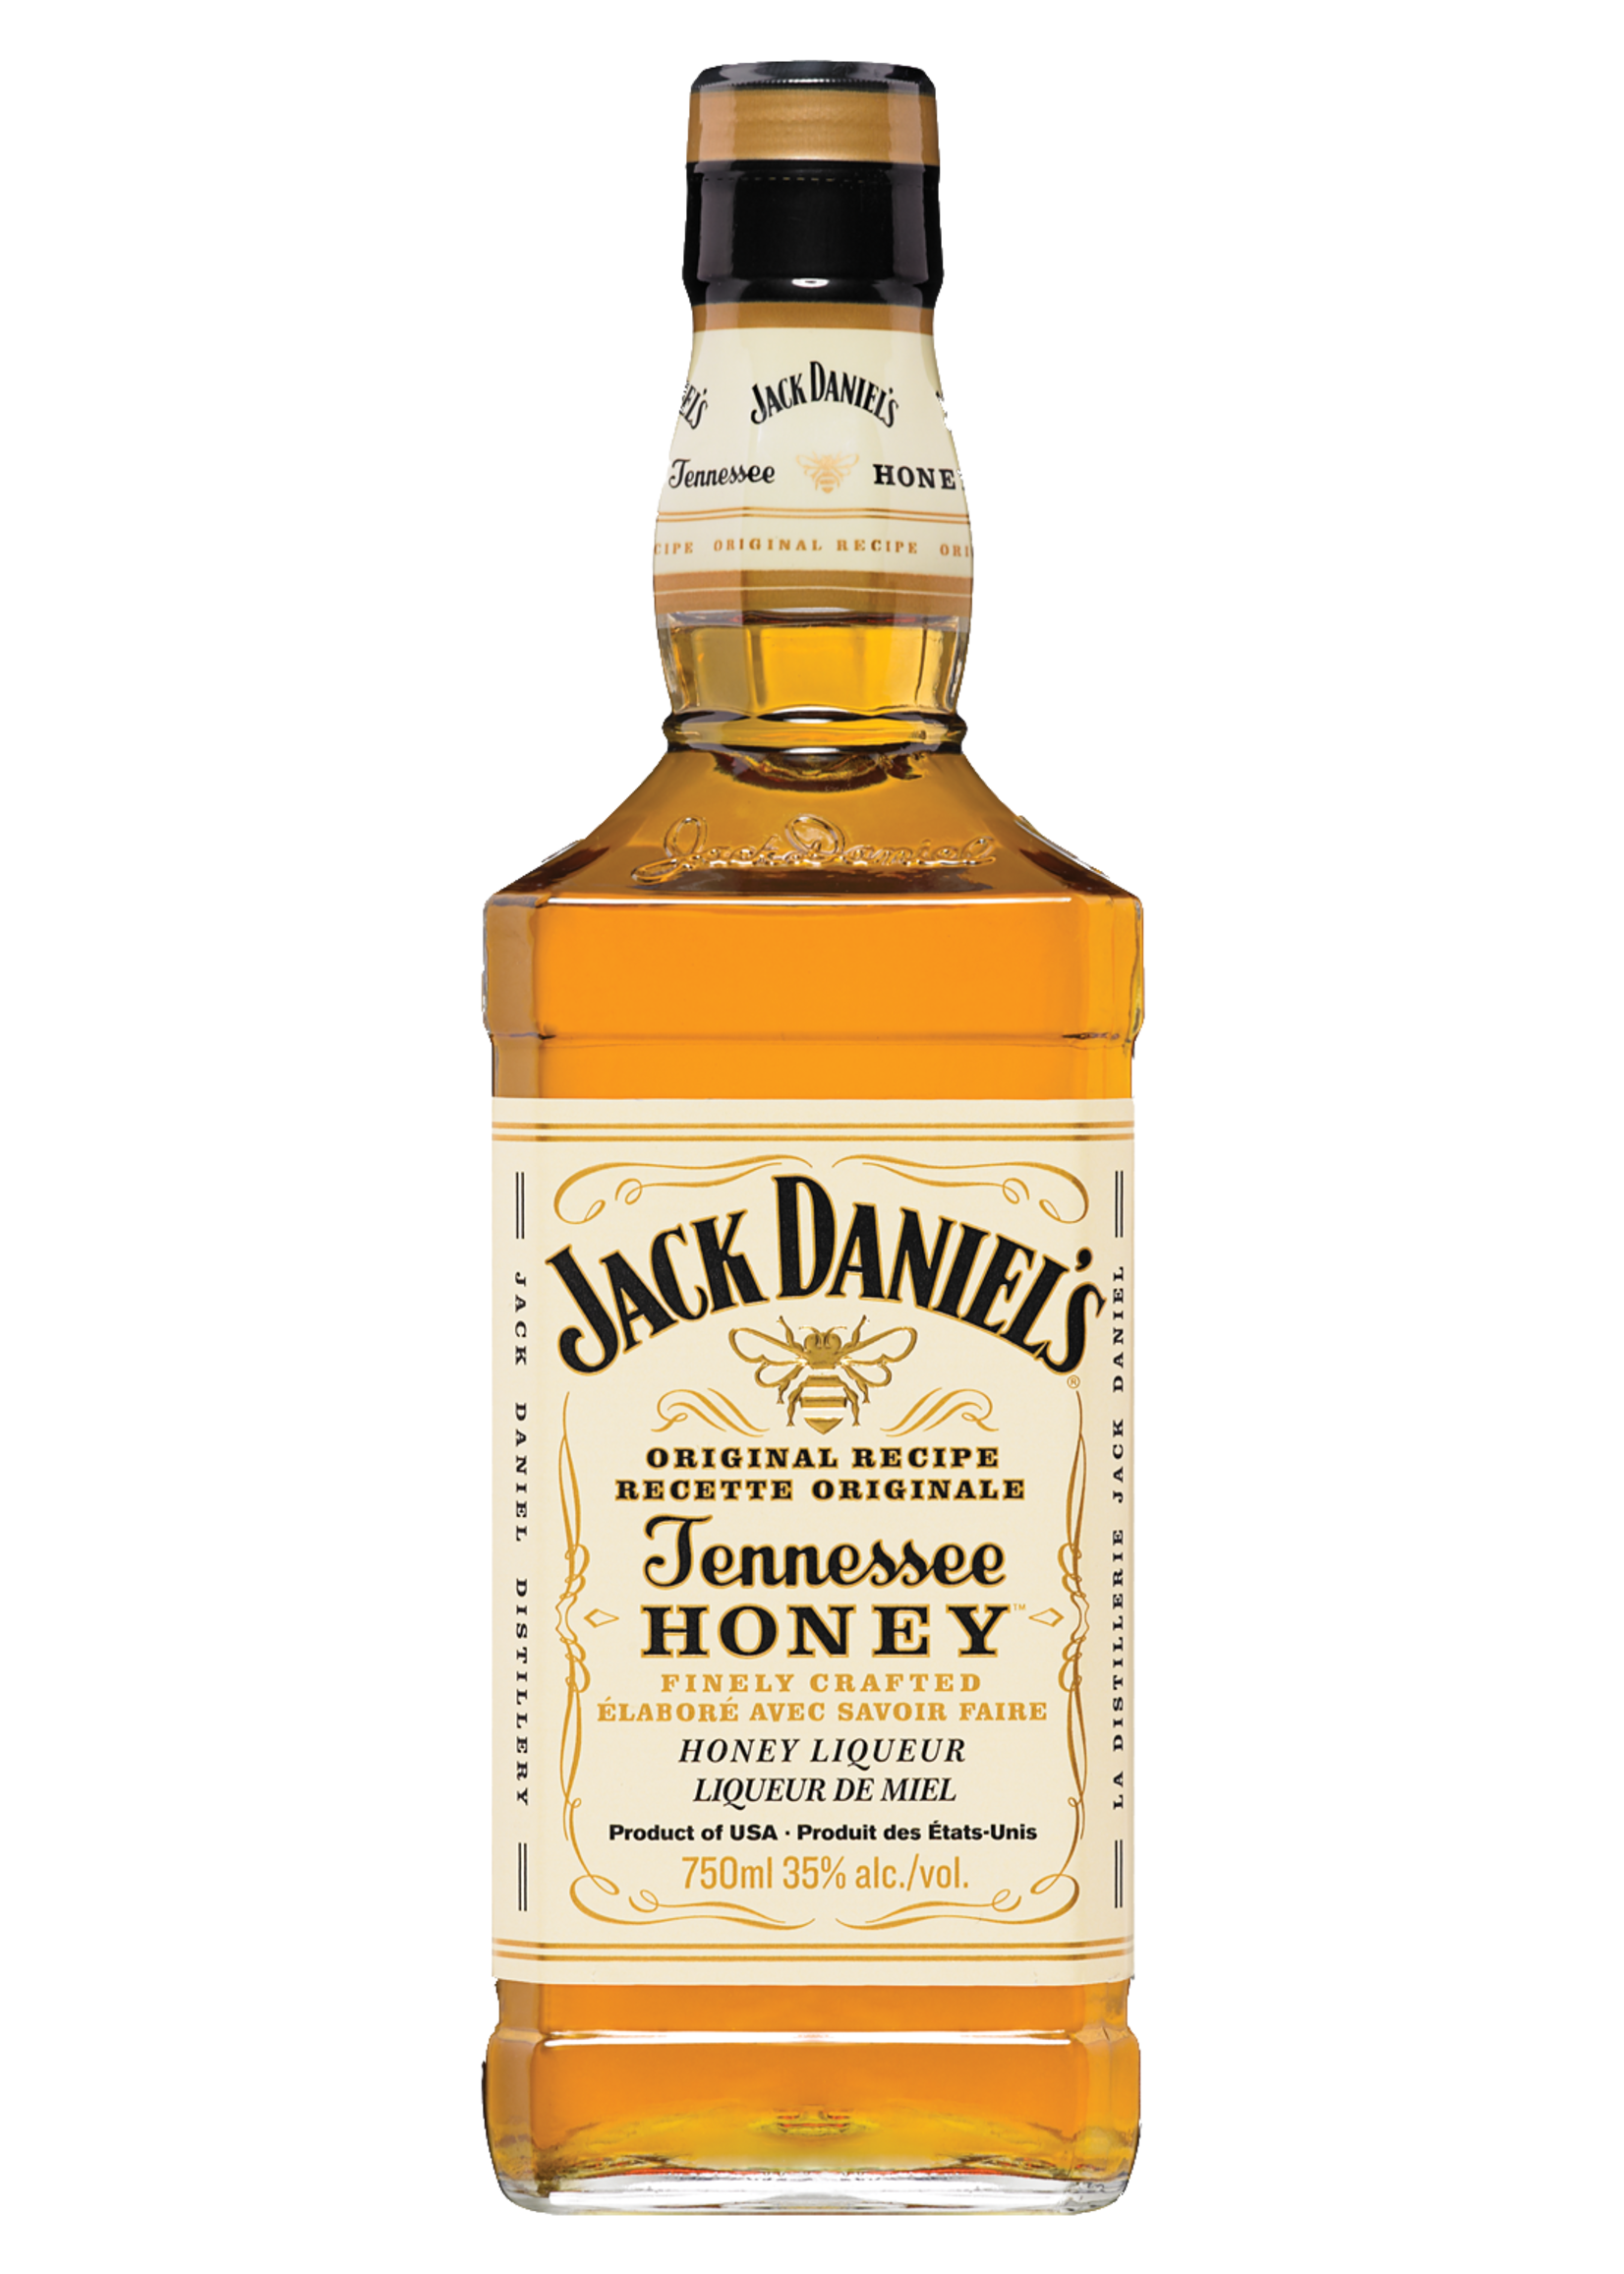 Jack Daniel's Jack Daniel's / Tennessee Honey